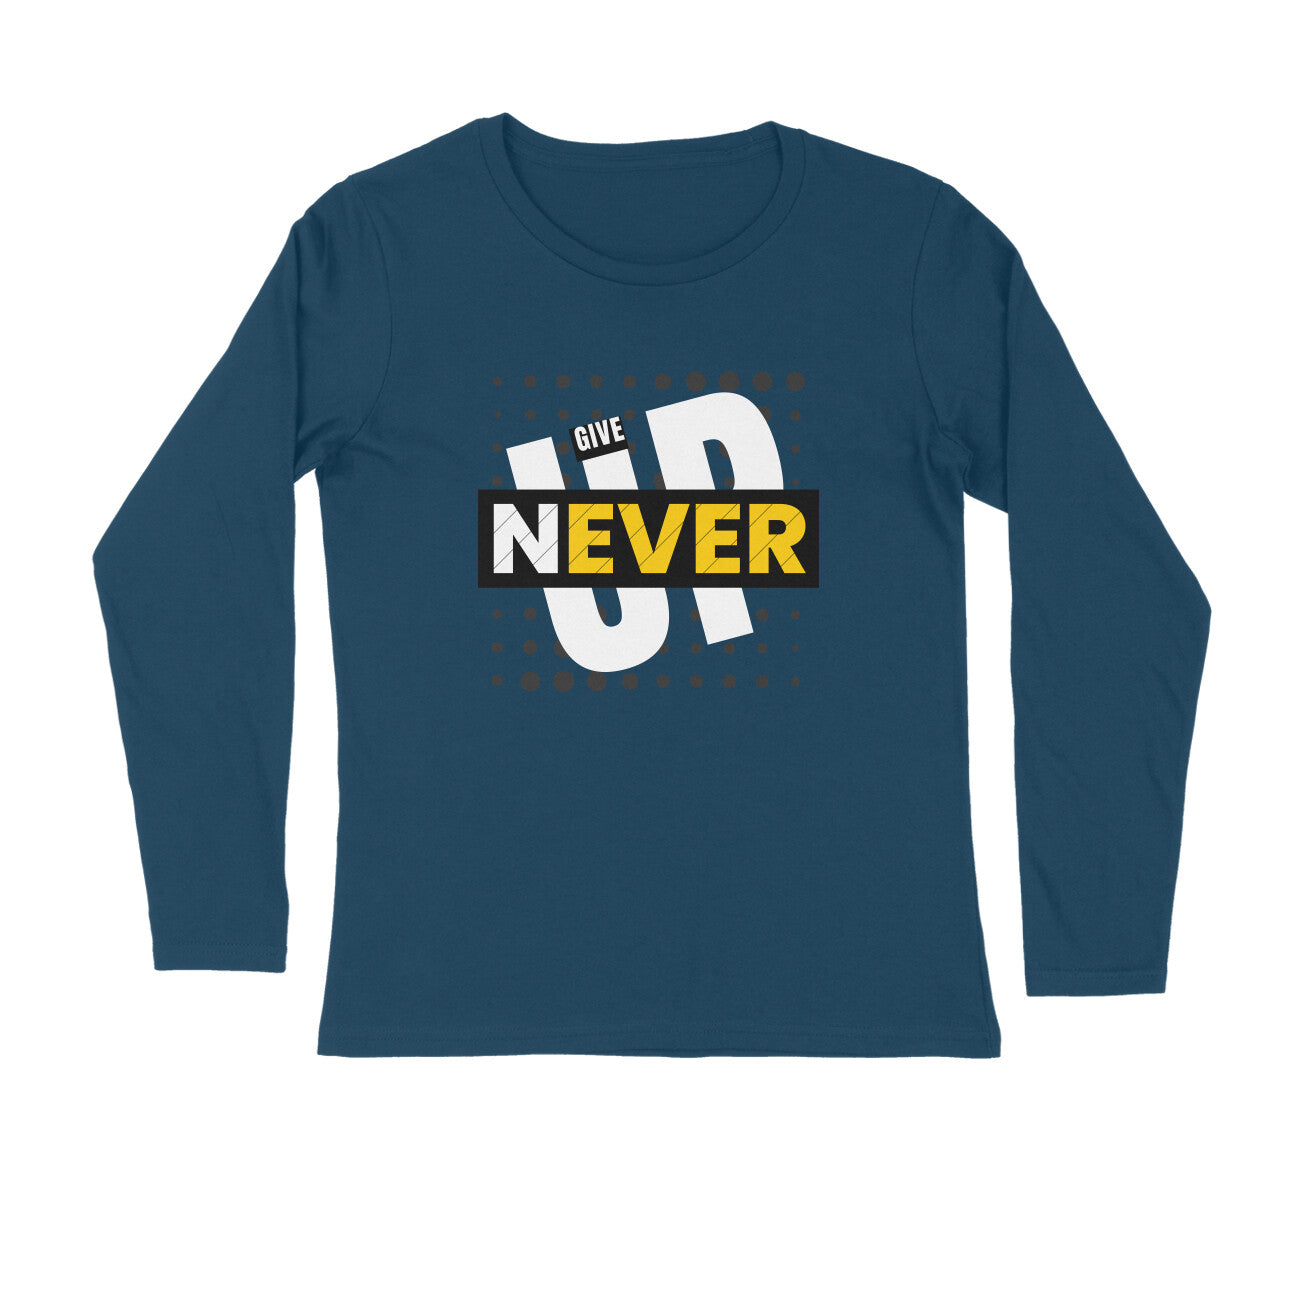 Never Give Up - Men's Navy Blue Full Sleeve T-shirt